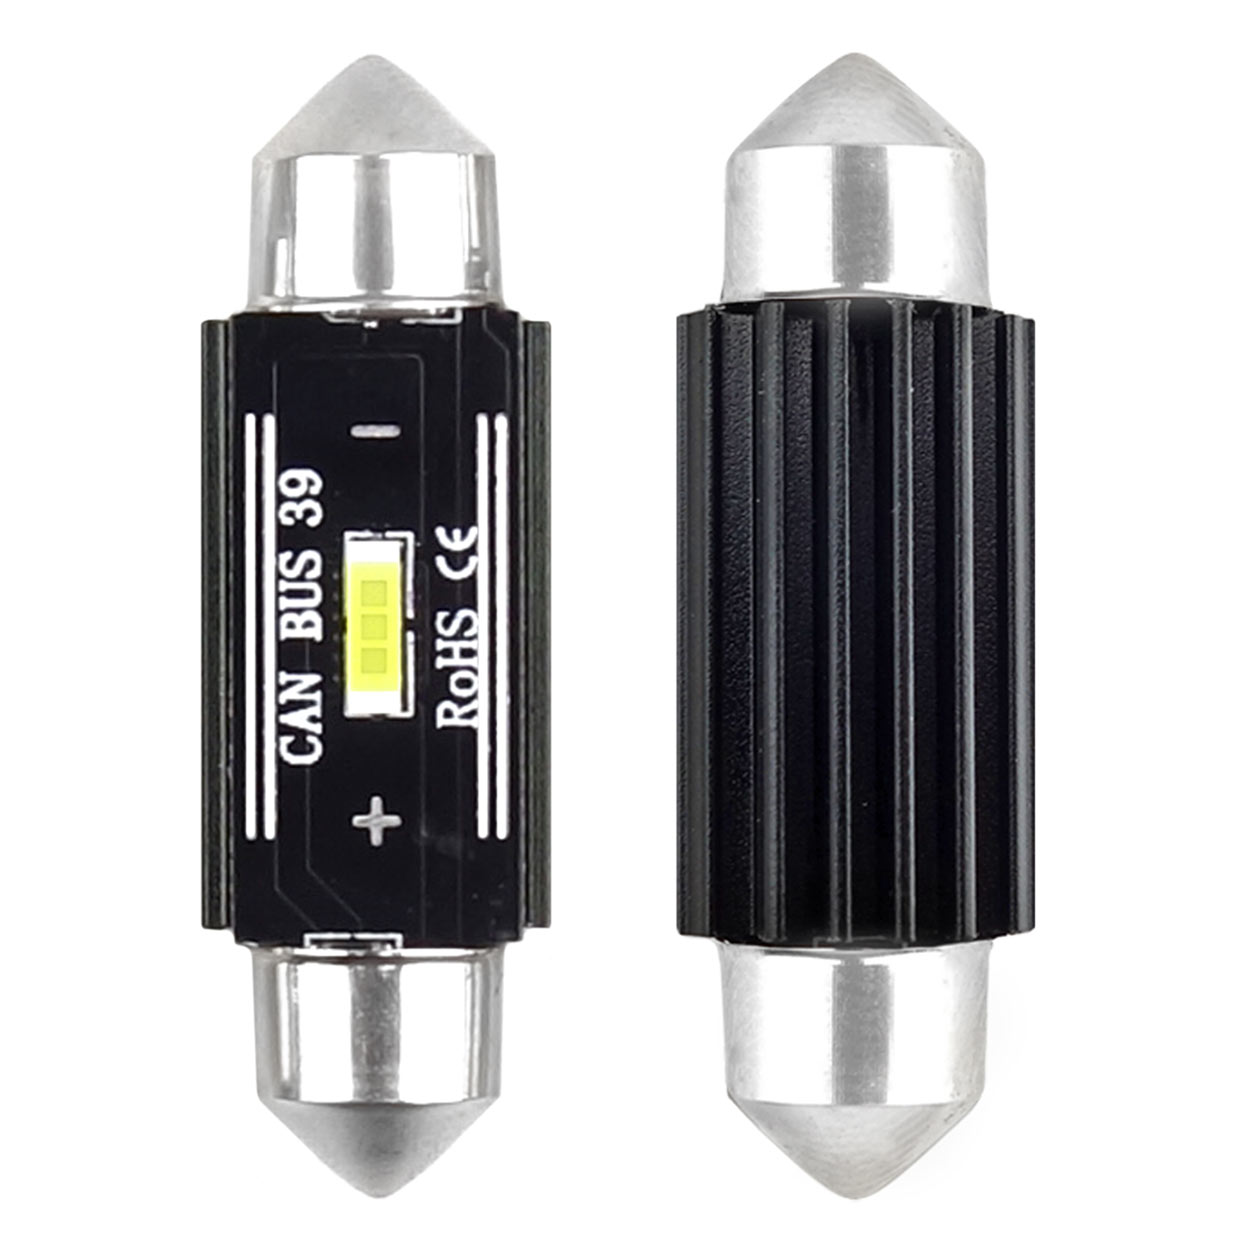 Žárovka 12V LED 1xSMD SUFIT bílá, CAN-BUS, délka 39mm, 02443